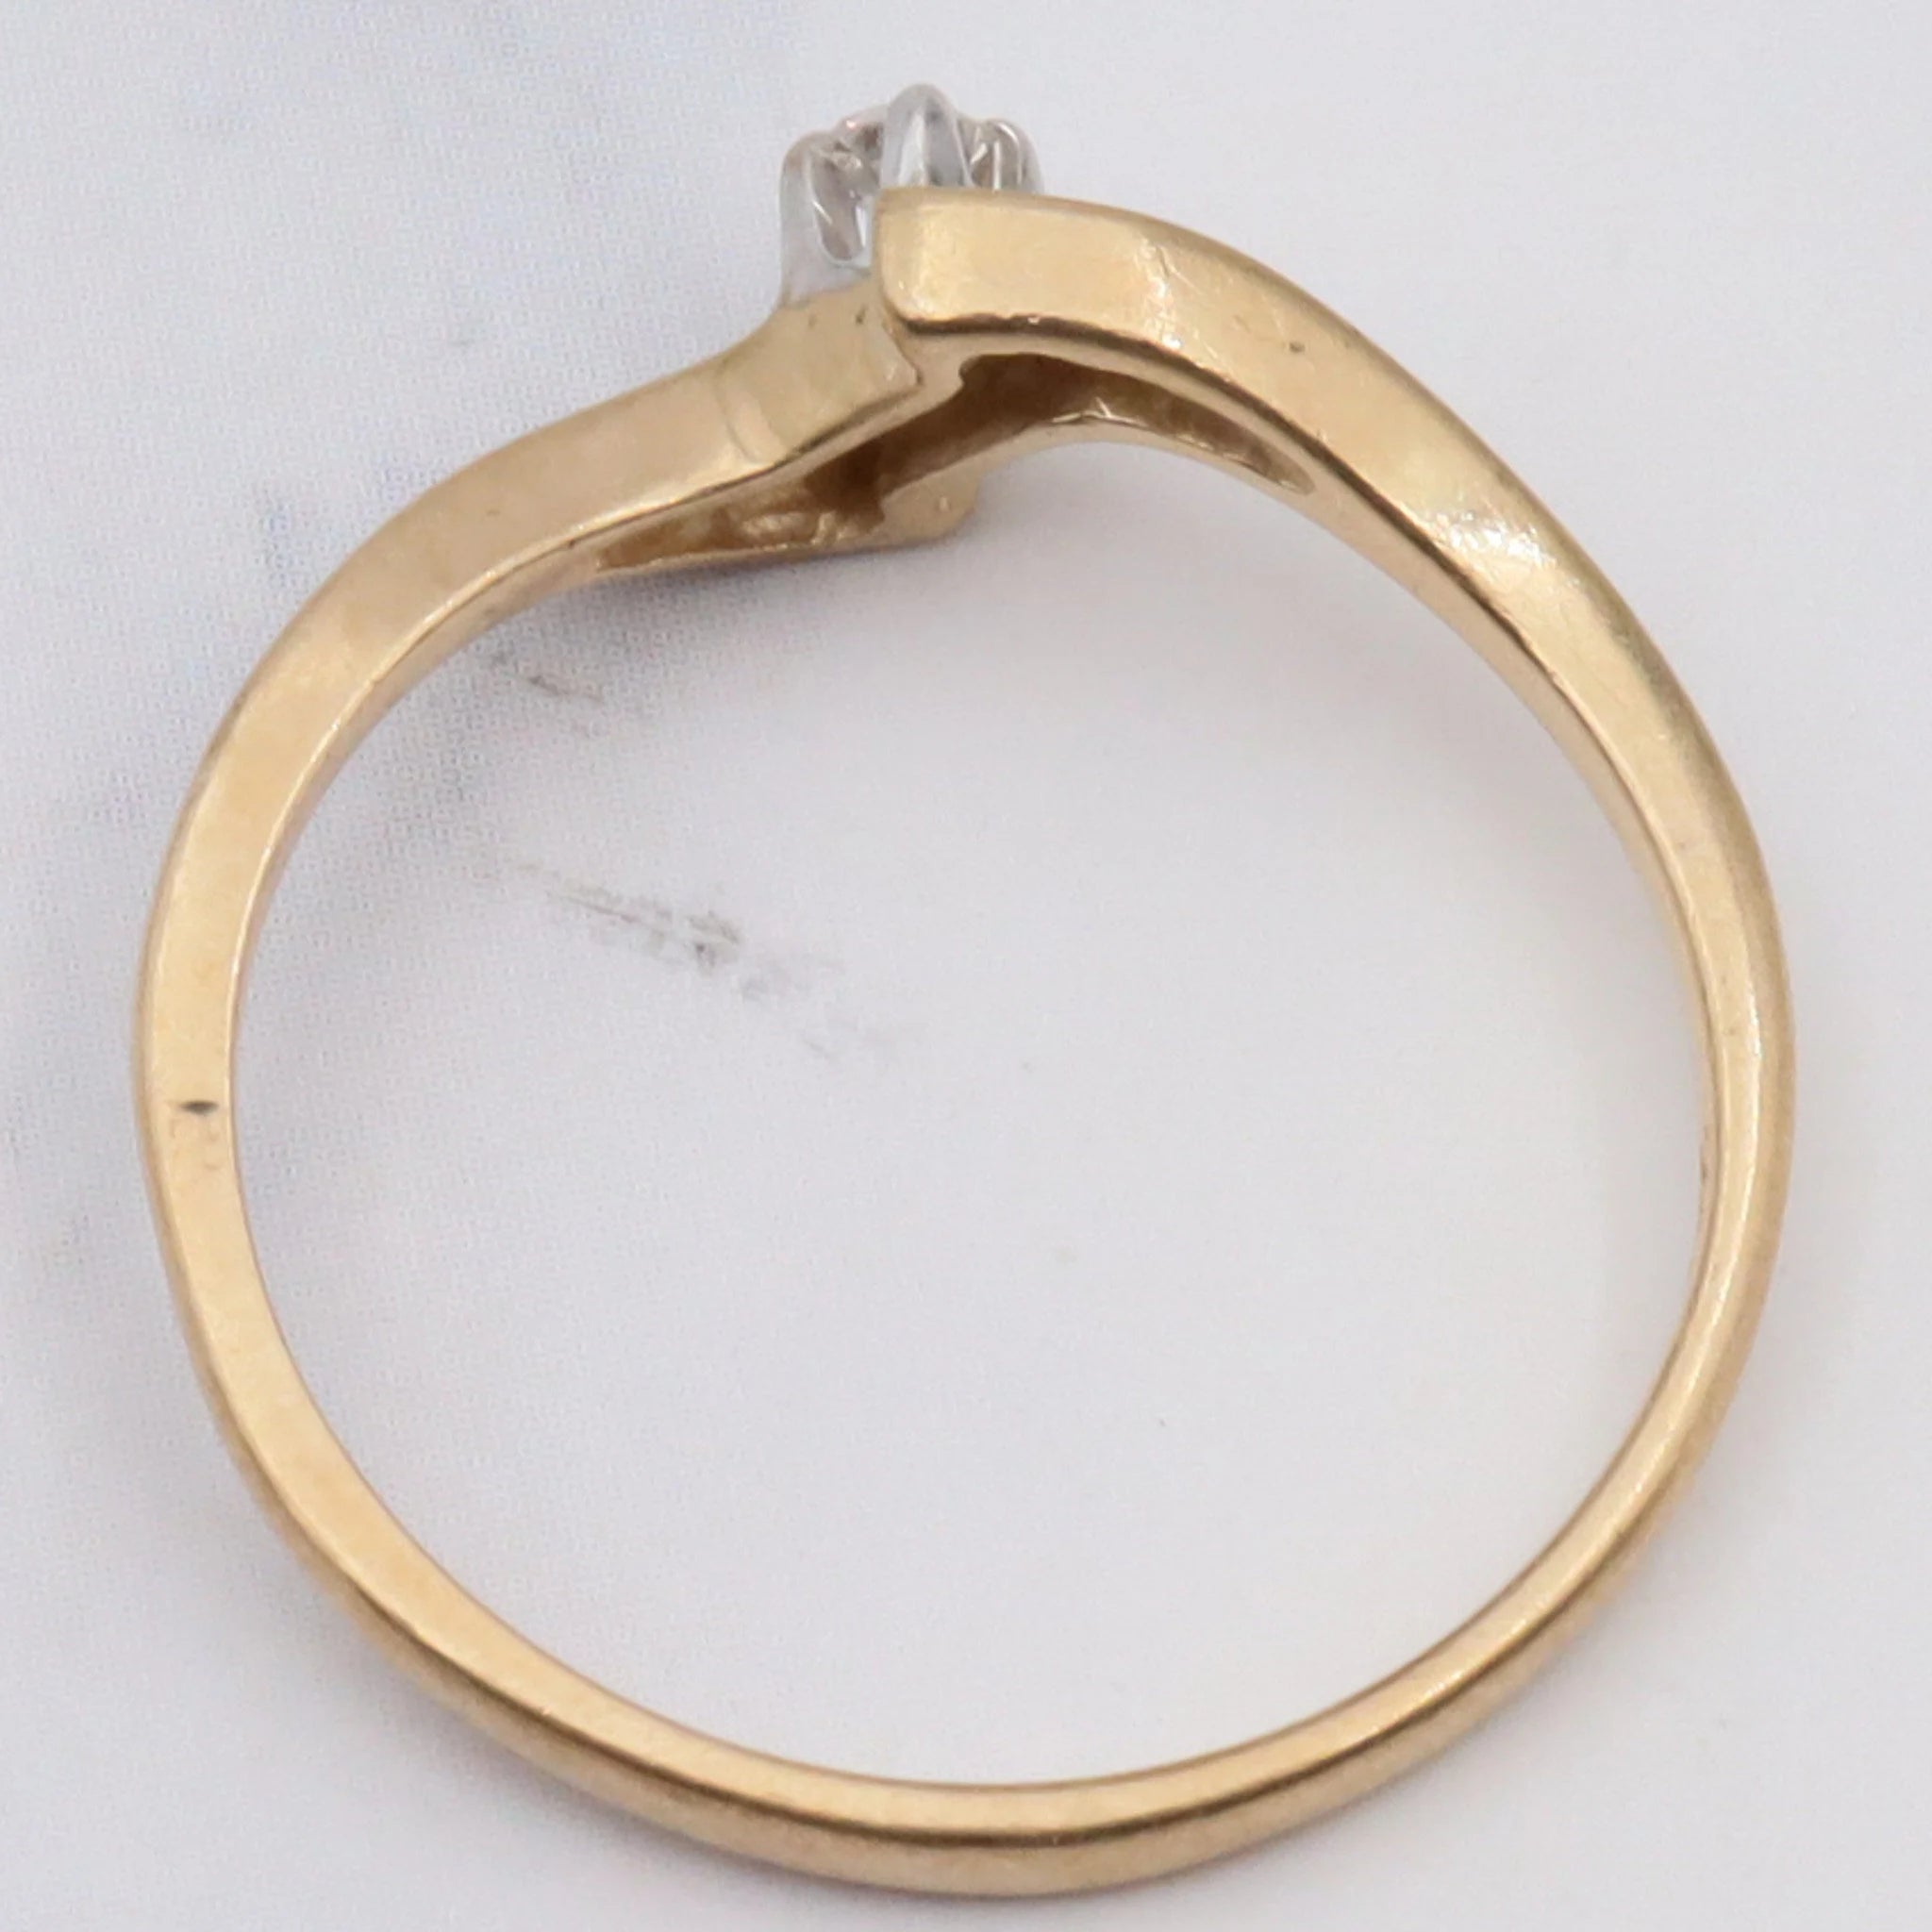 Vintage retro 10k gold and diamond ring - size 6 1/2